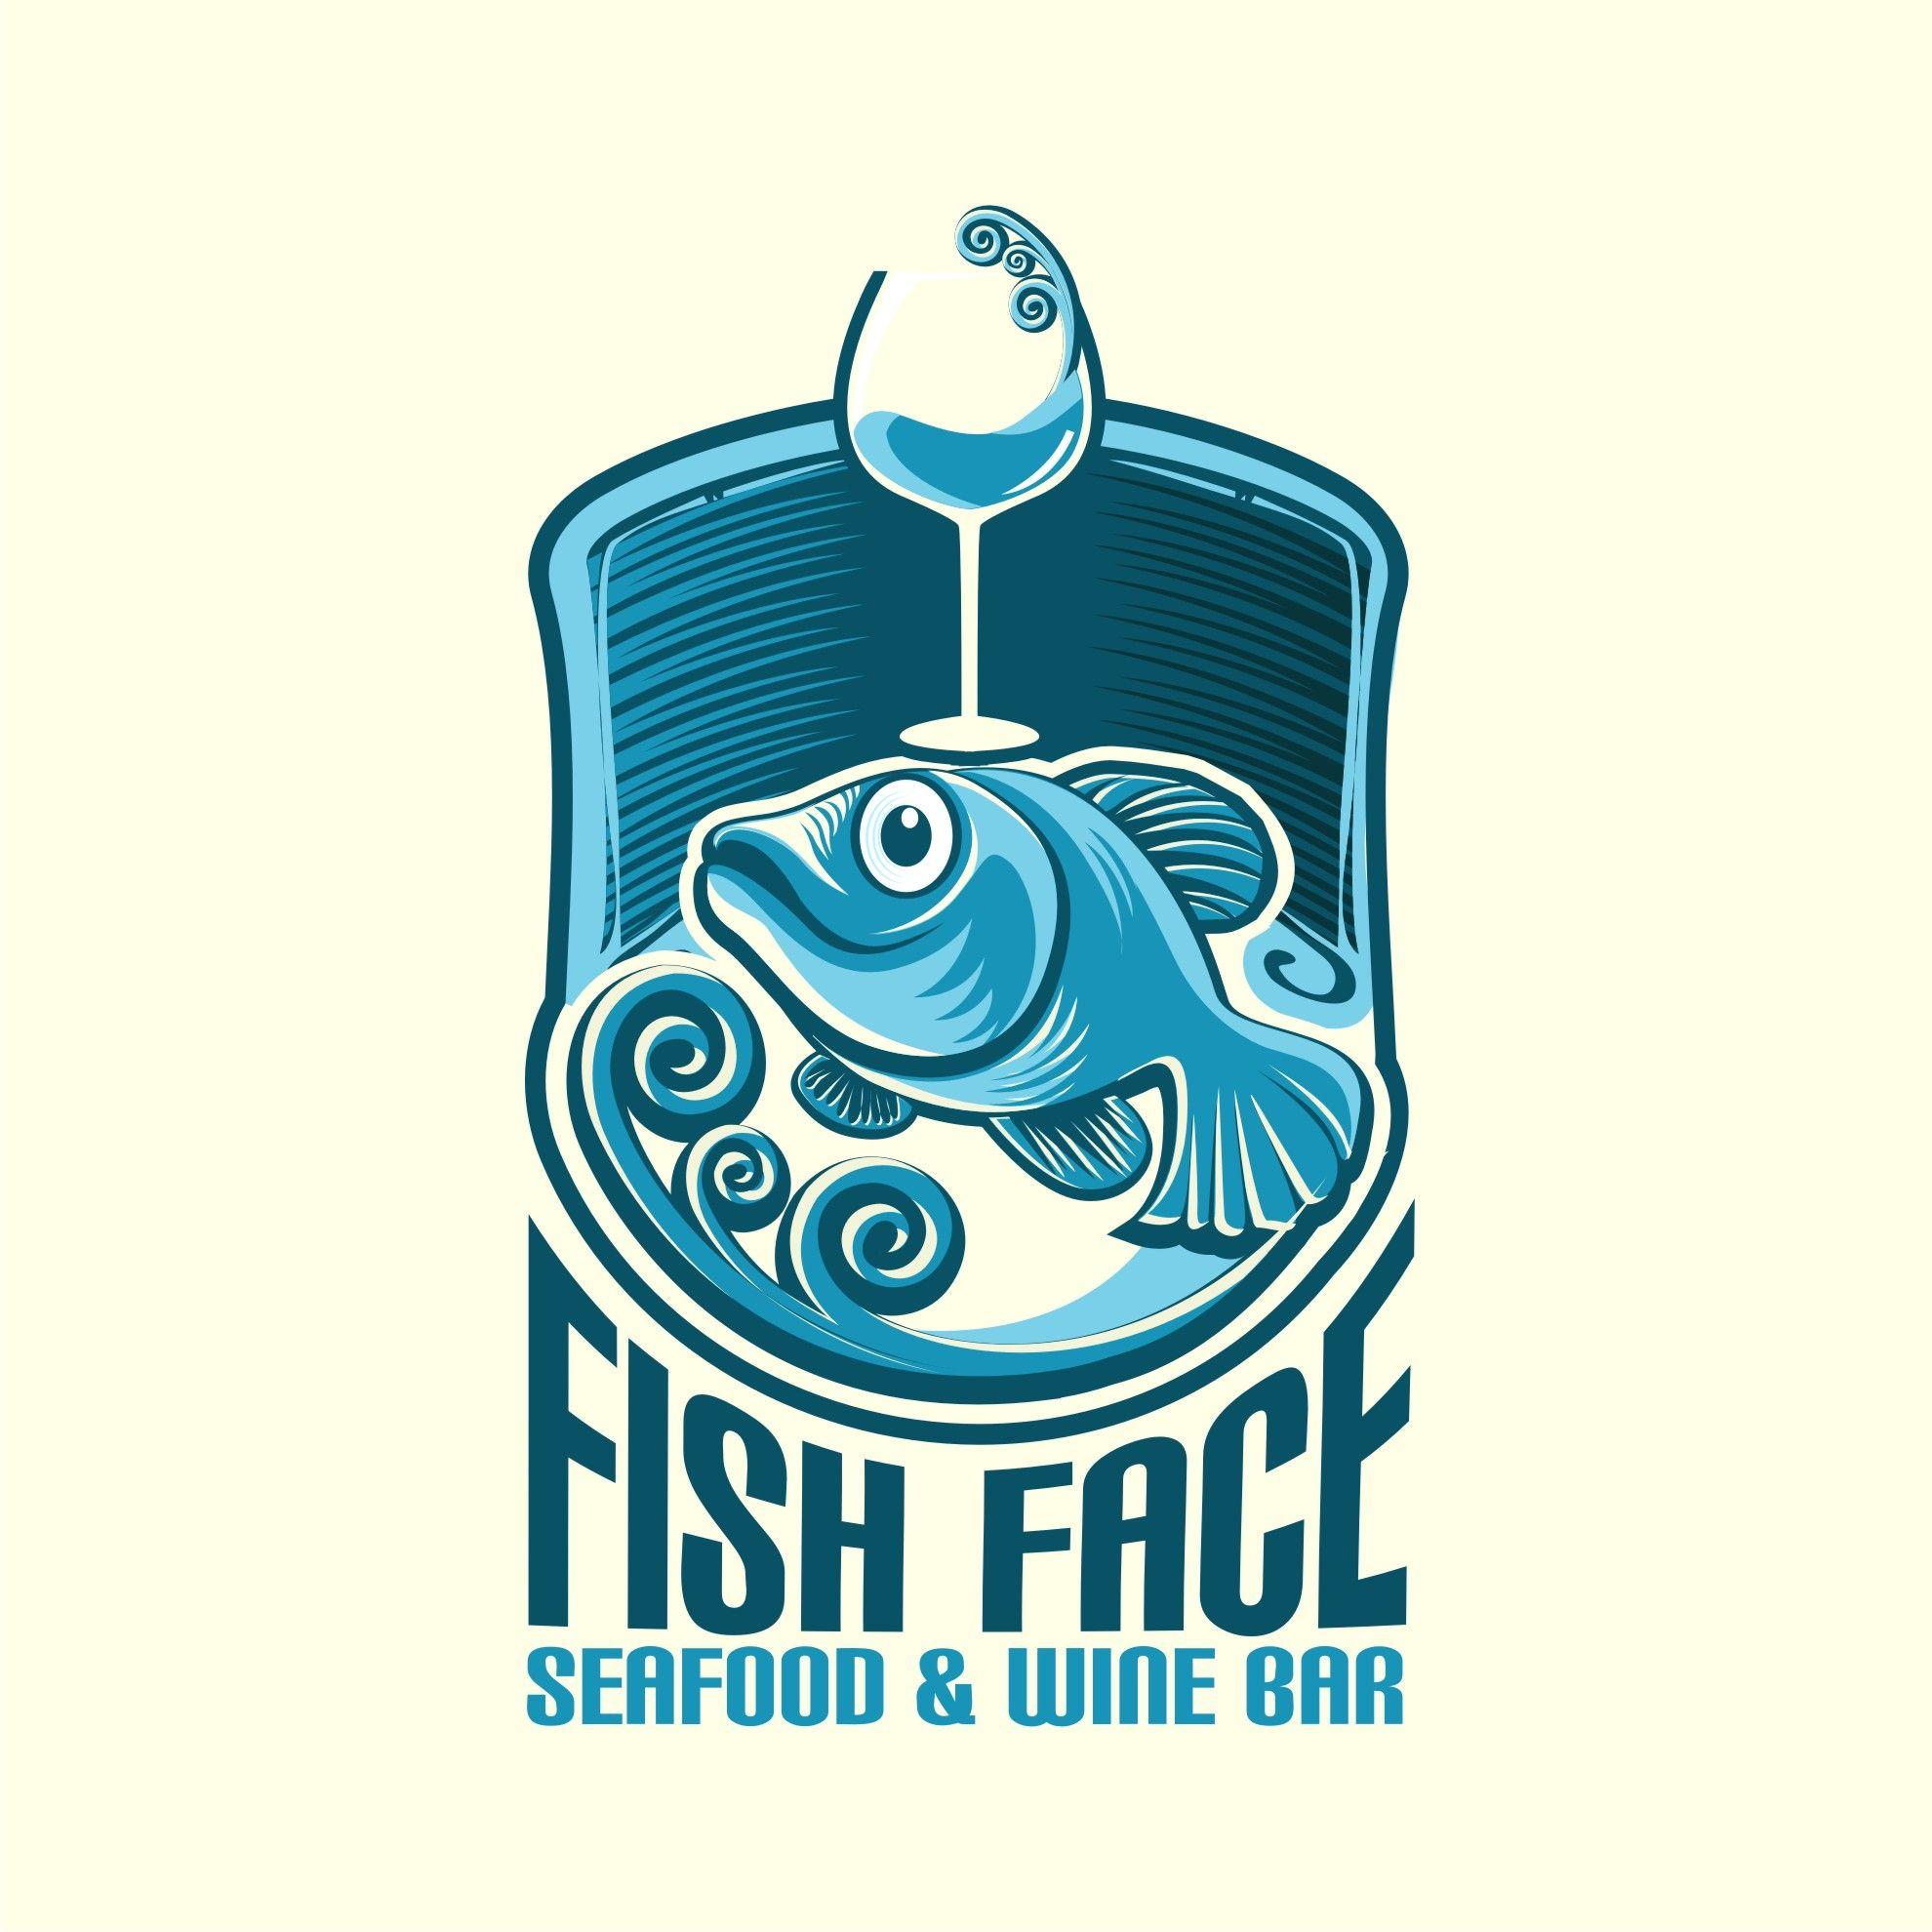 Fish Restaurant Logo - Modern, Elegant, Seafood Restaurant Logo Design for Fish Face ...